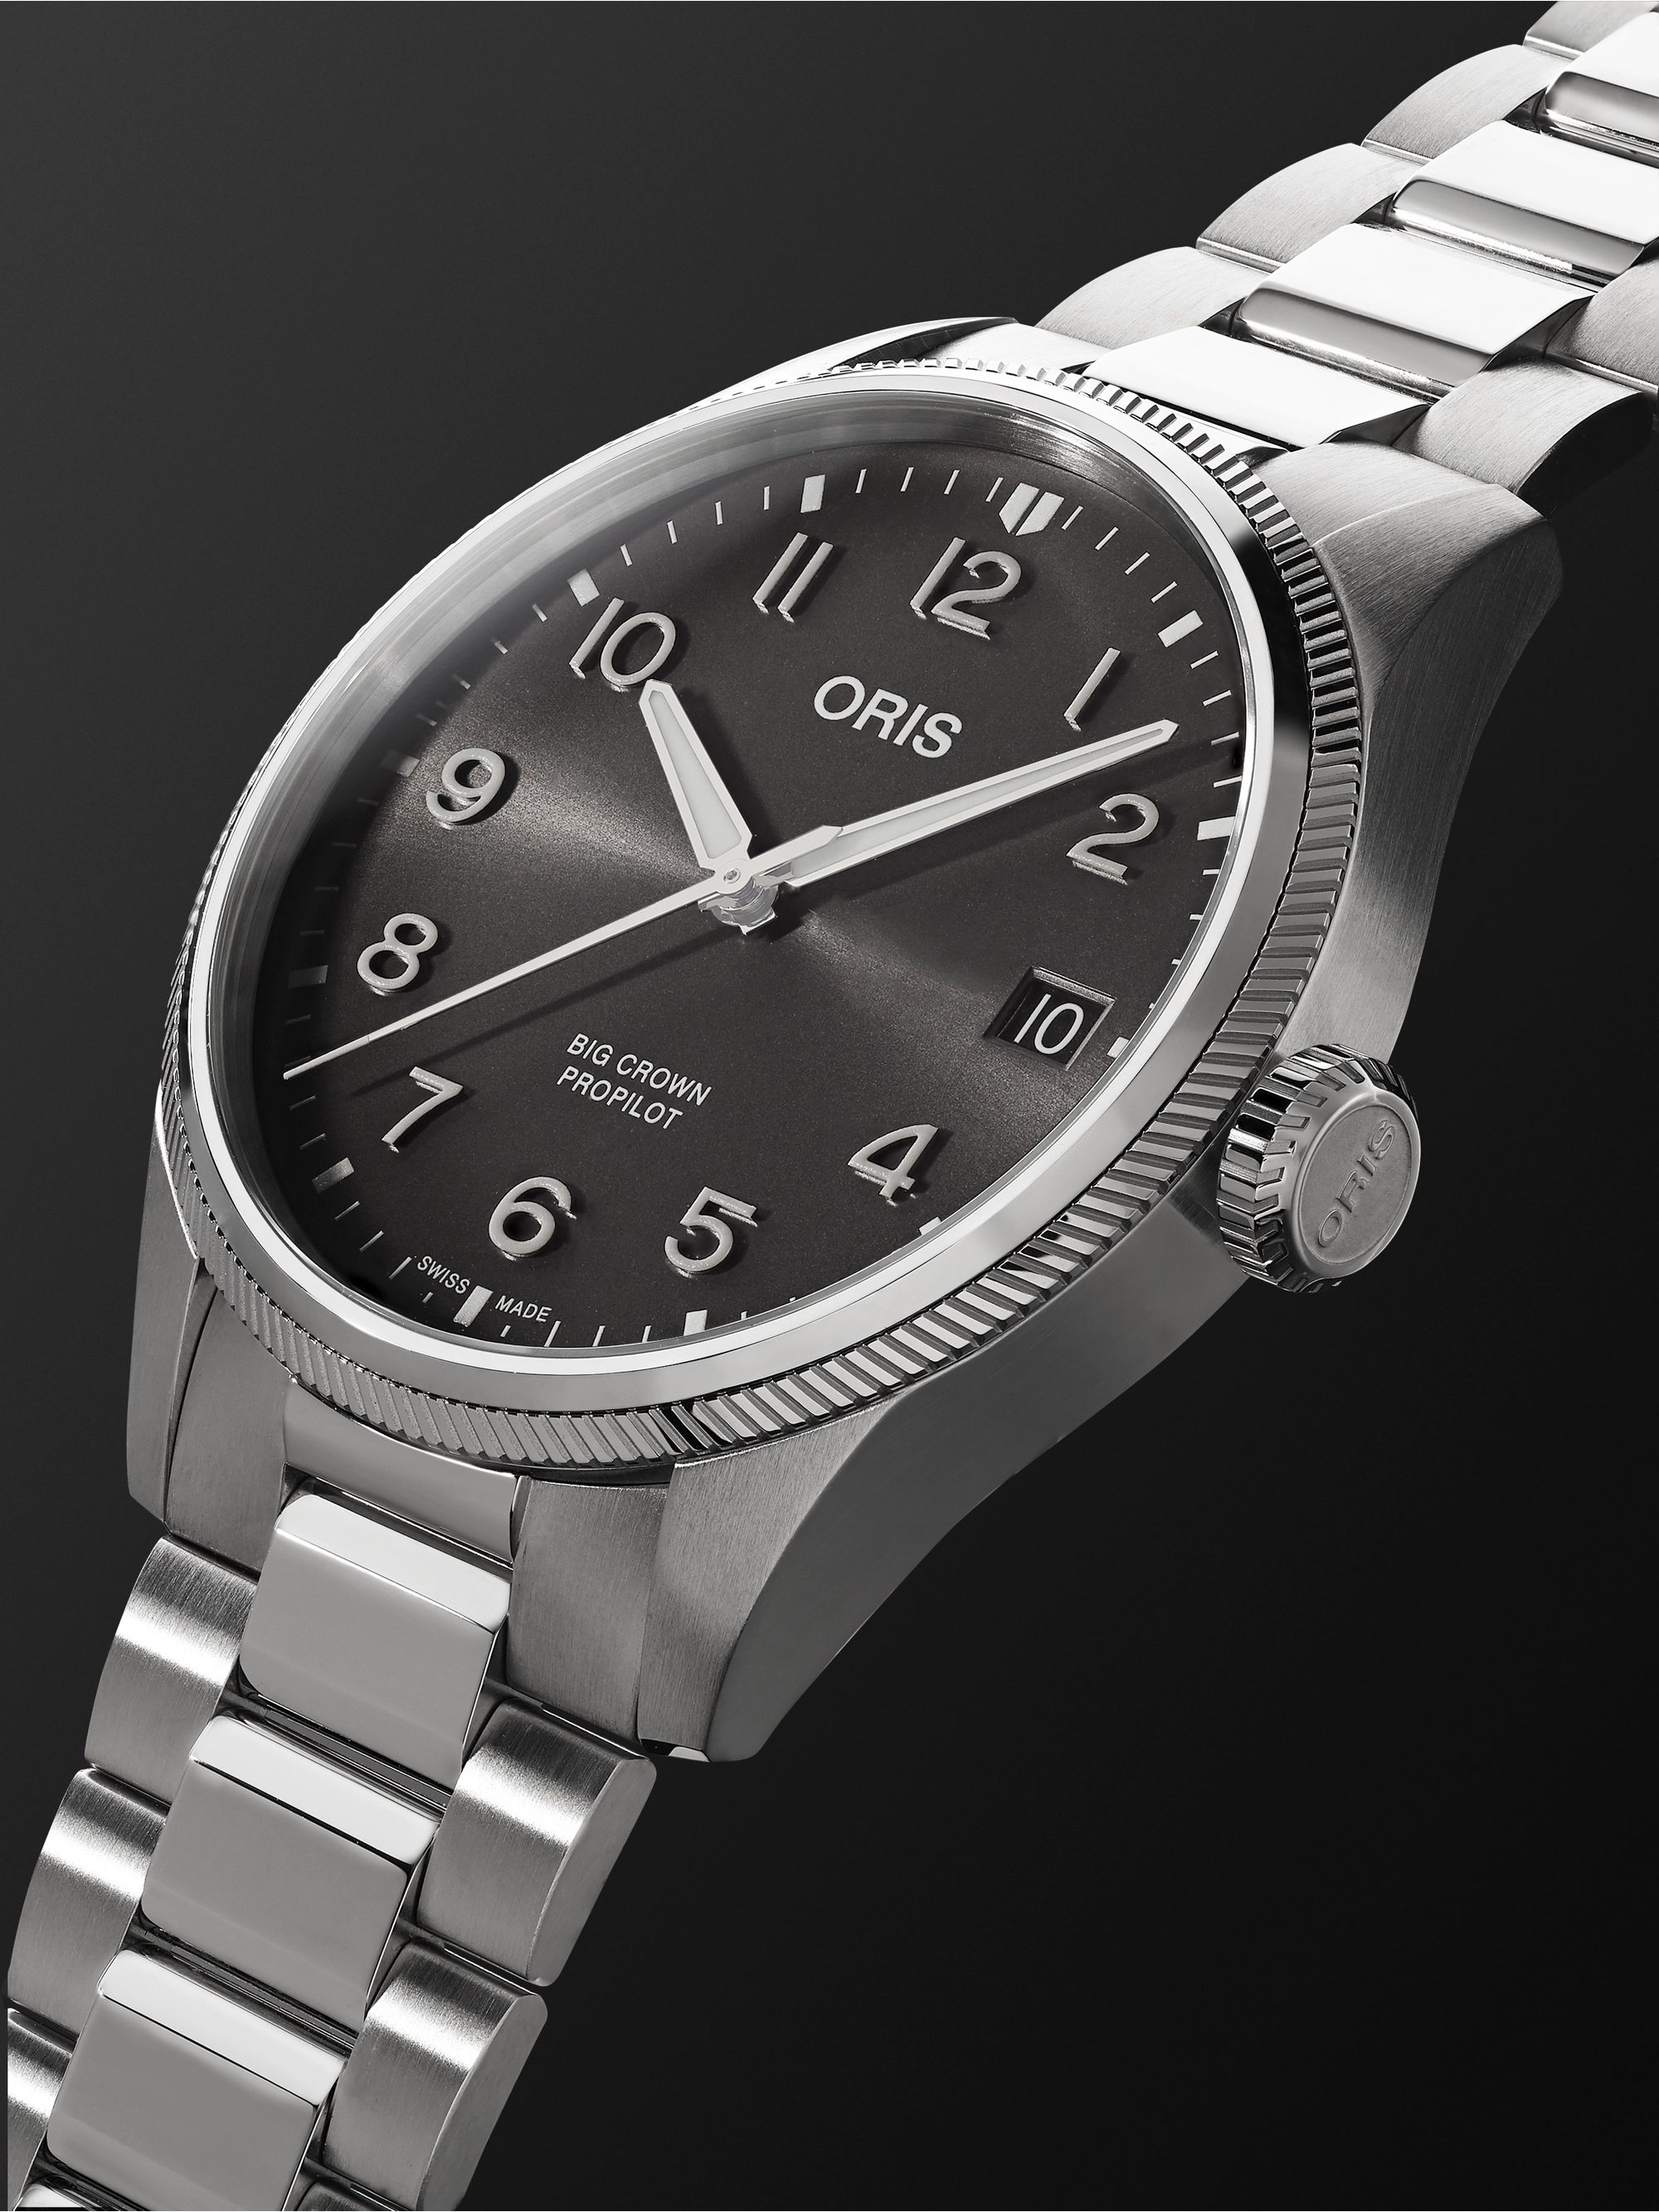 ORIS Big Crown ProPilot Big Date Automatic 41mm Stainless Steel Watch, Ref. No. 01 751 7761 4063-07 8 20 08P